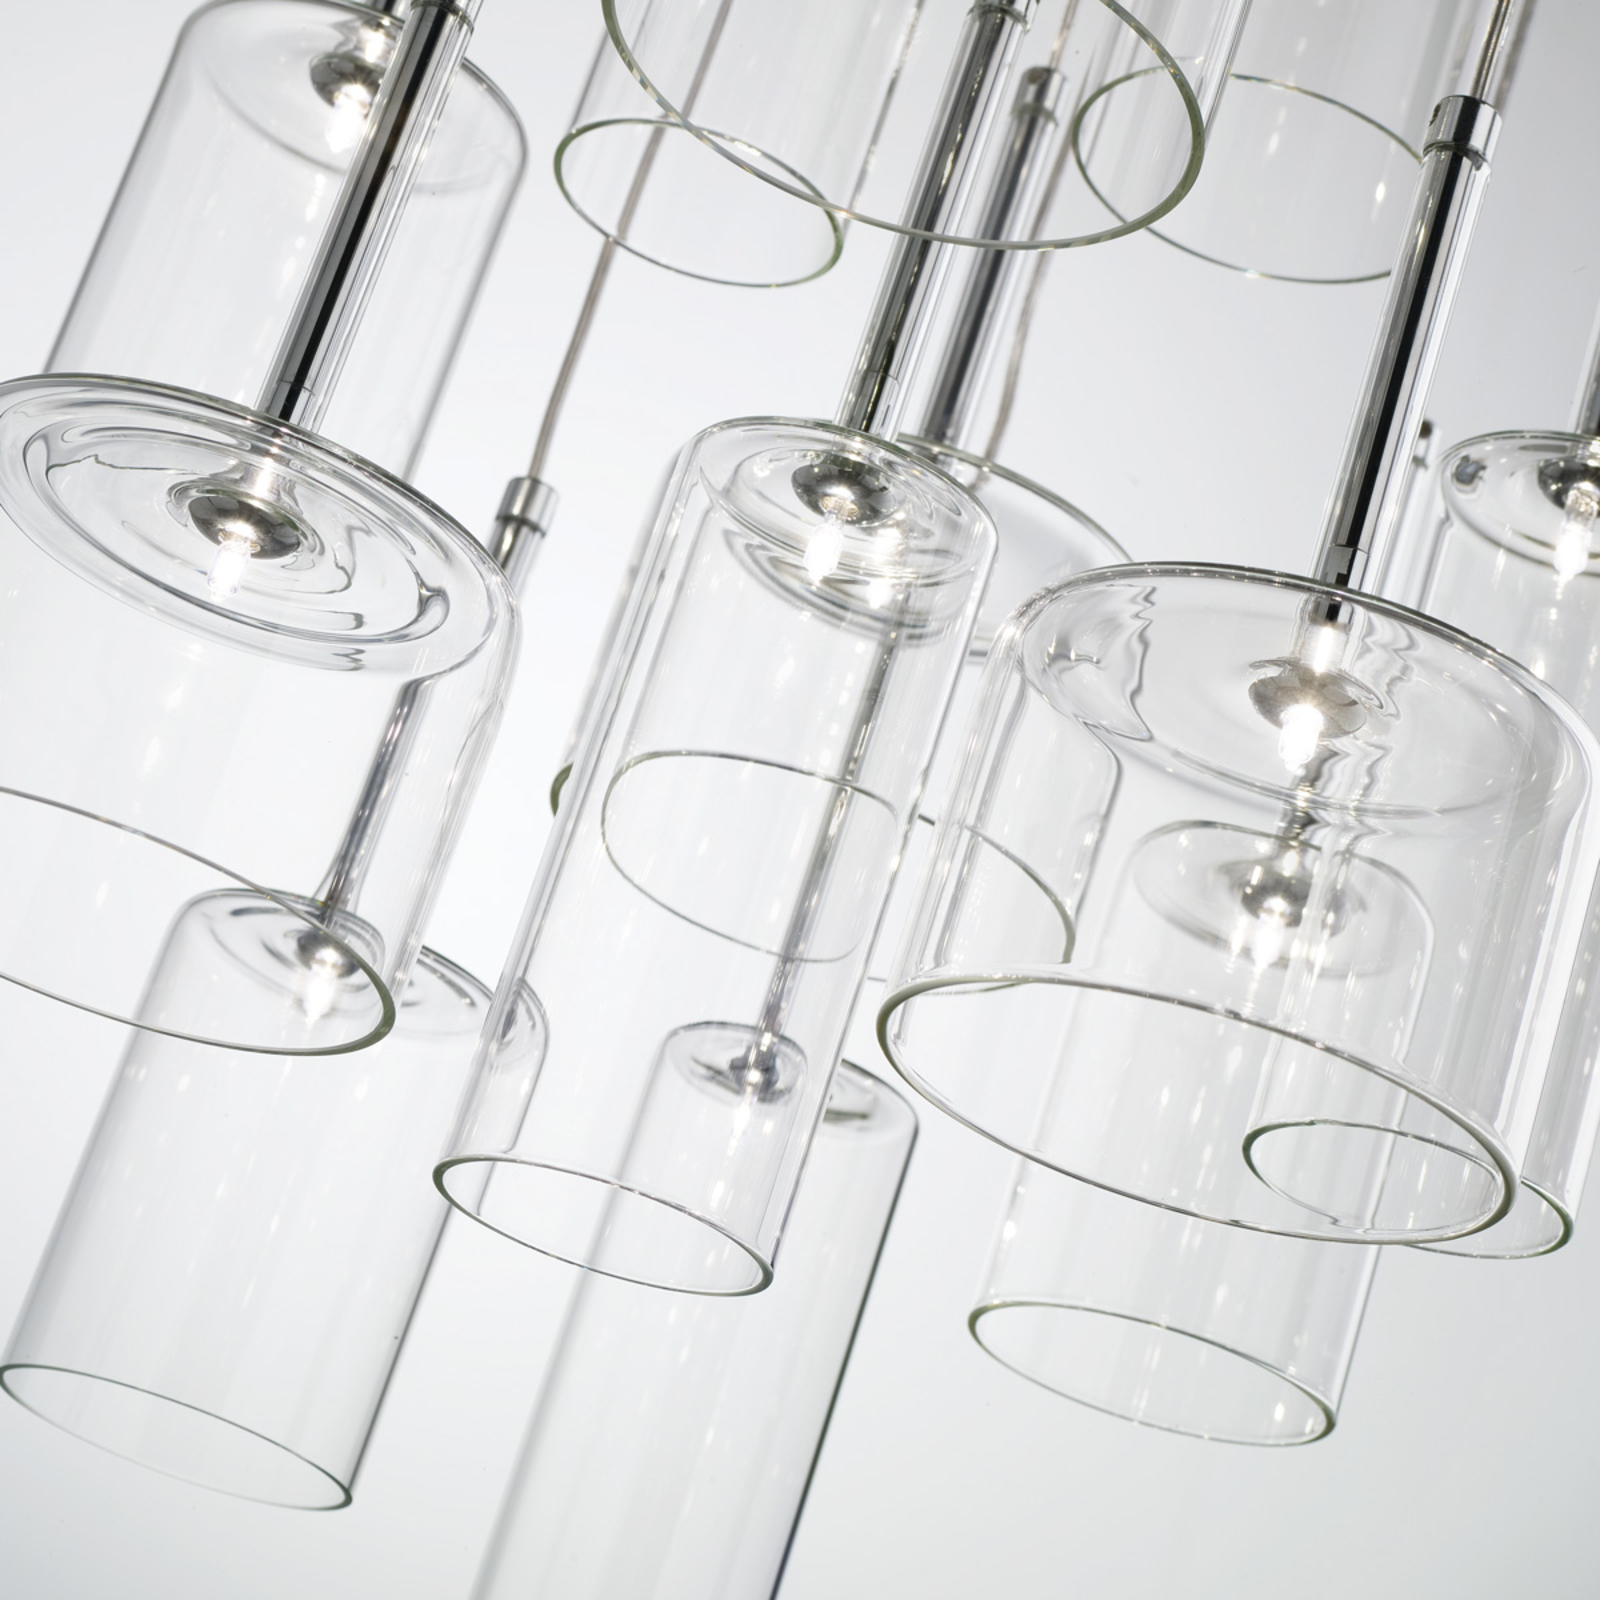 Impressive glass hanging lamp Spillray 12-bulb